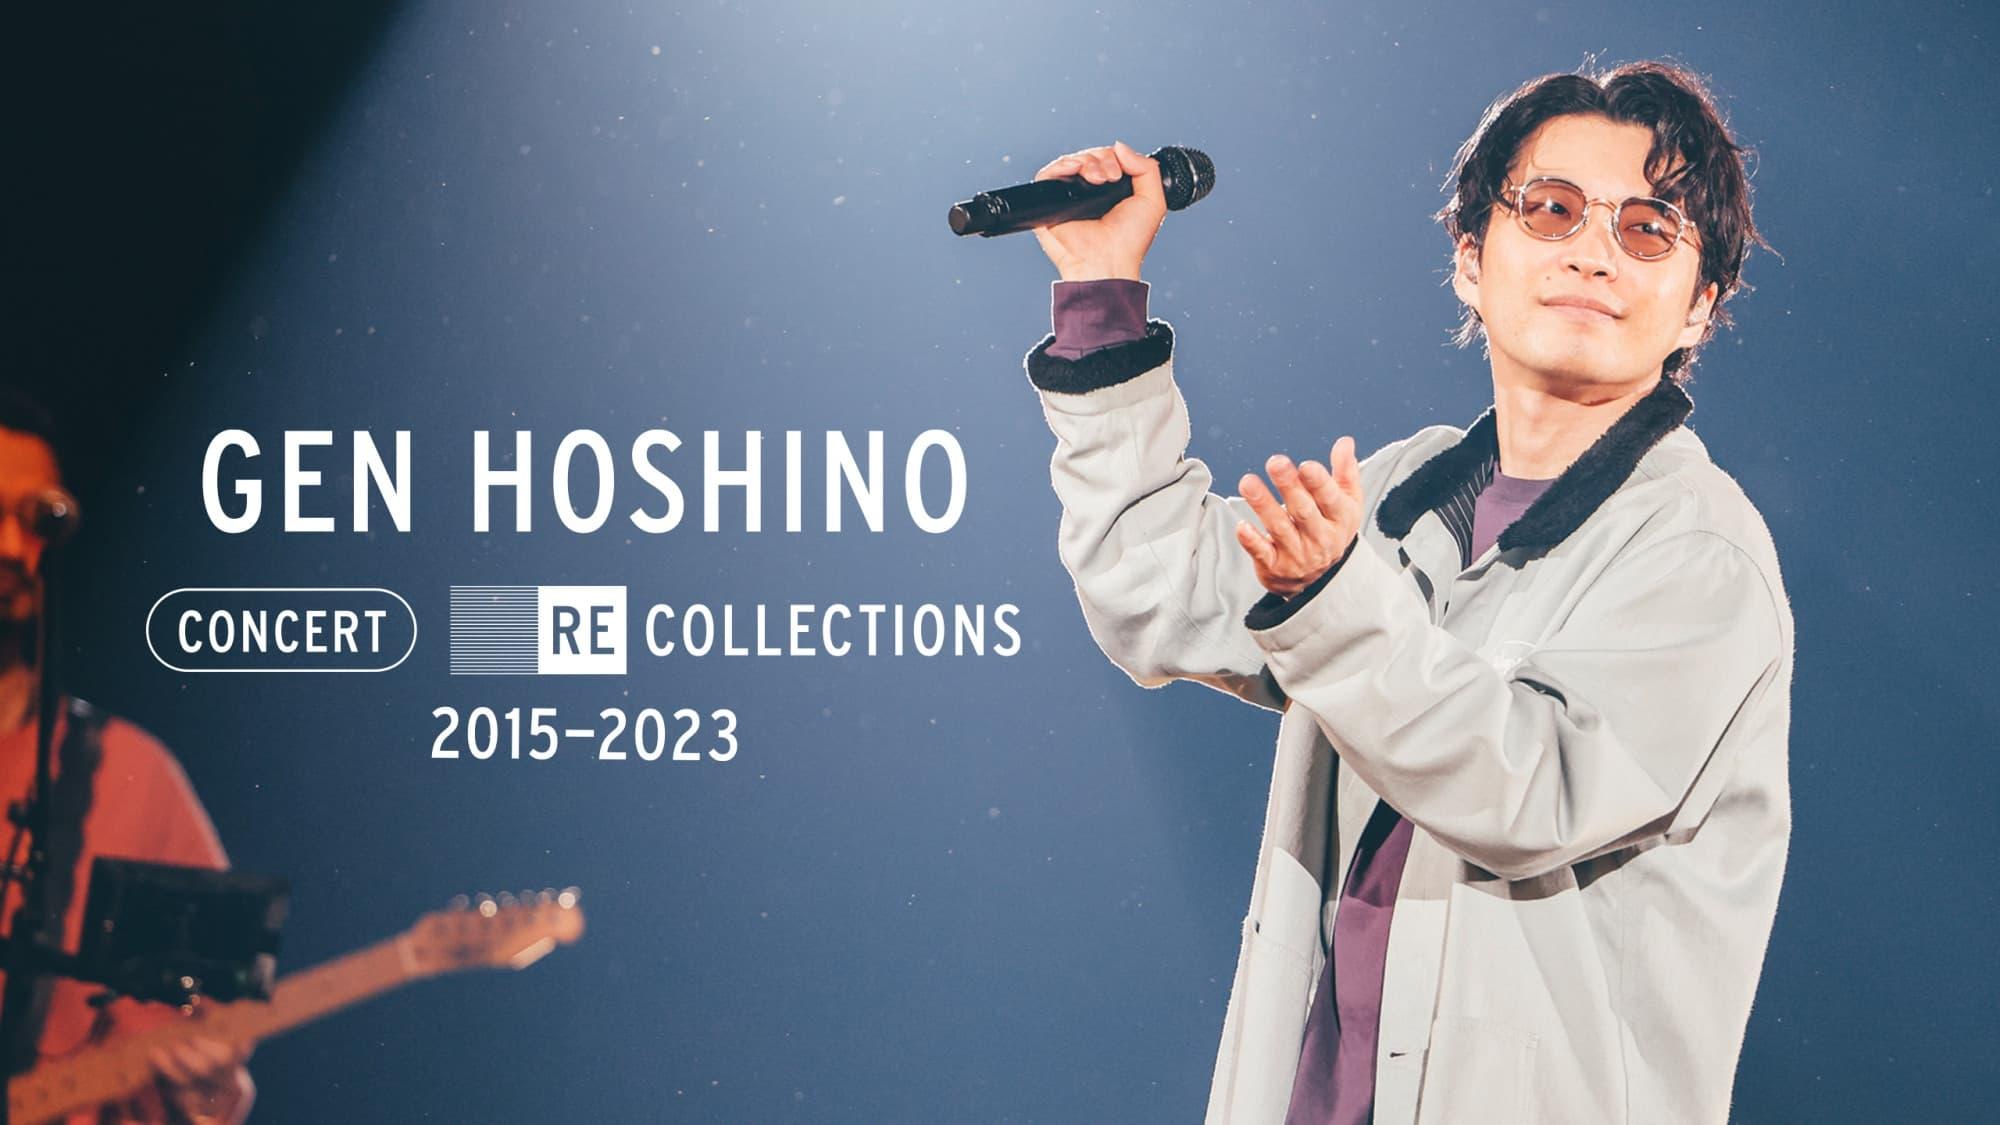 Gen Hoshino Concert Recollections 2015-2023 backdrop